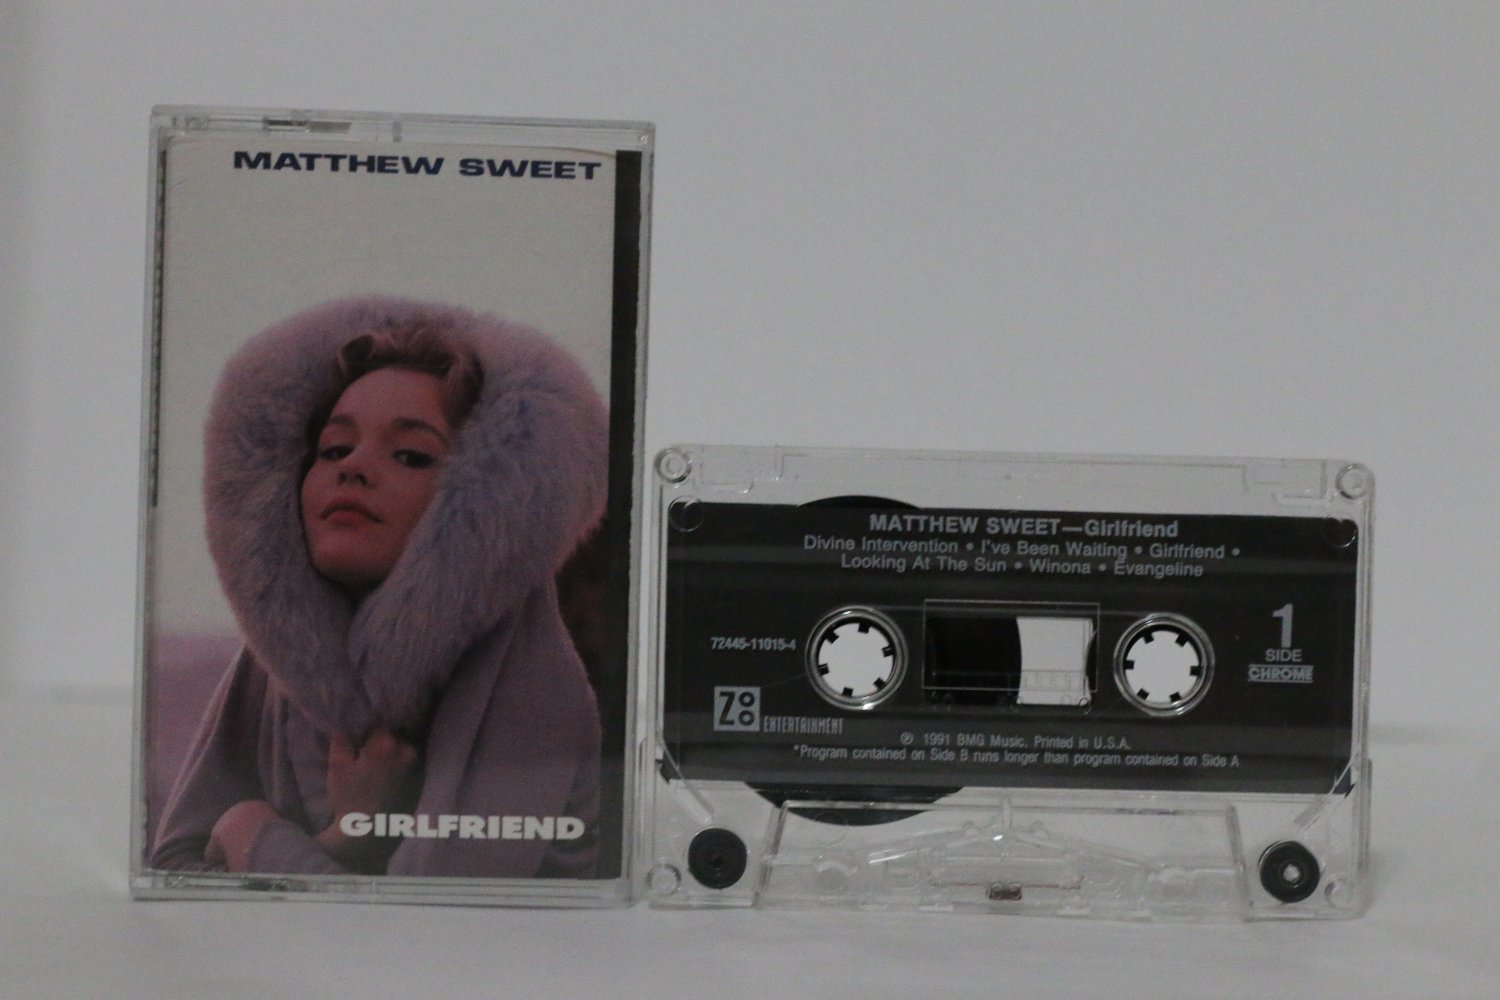 Matthew Sweet- Girlfriend 1991; Cassette C1065